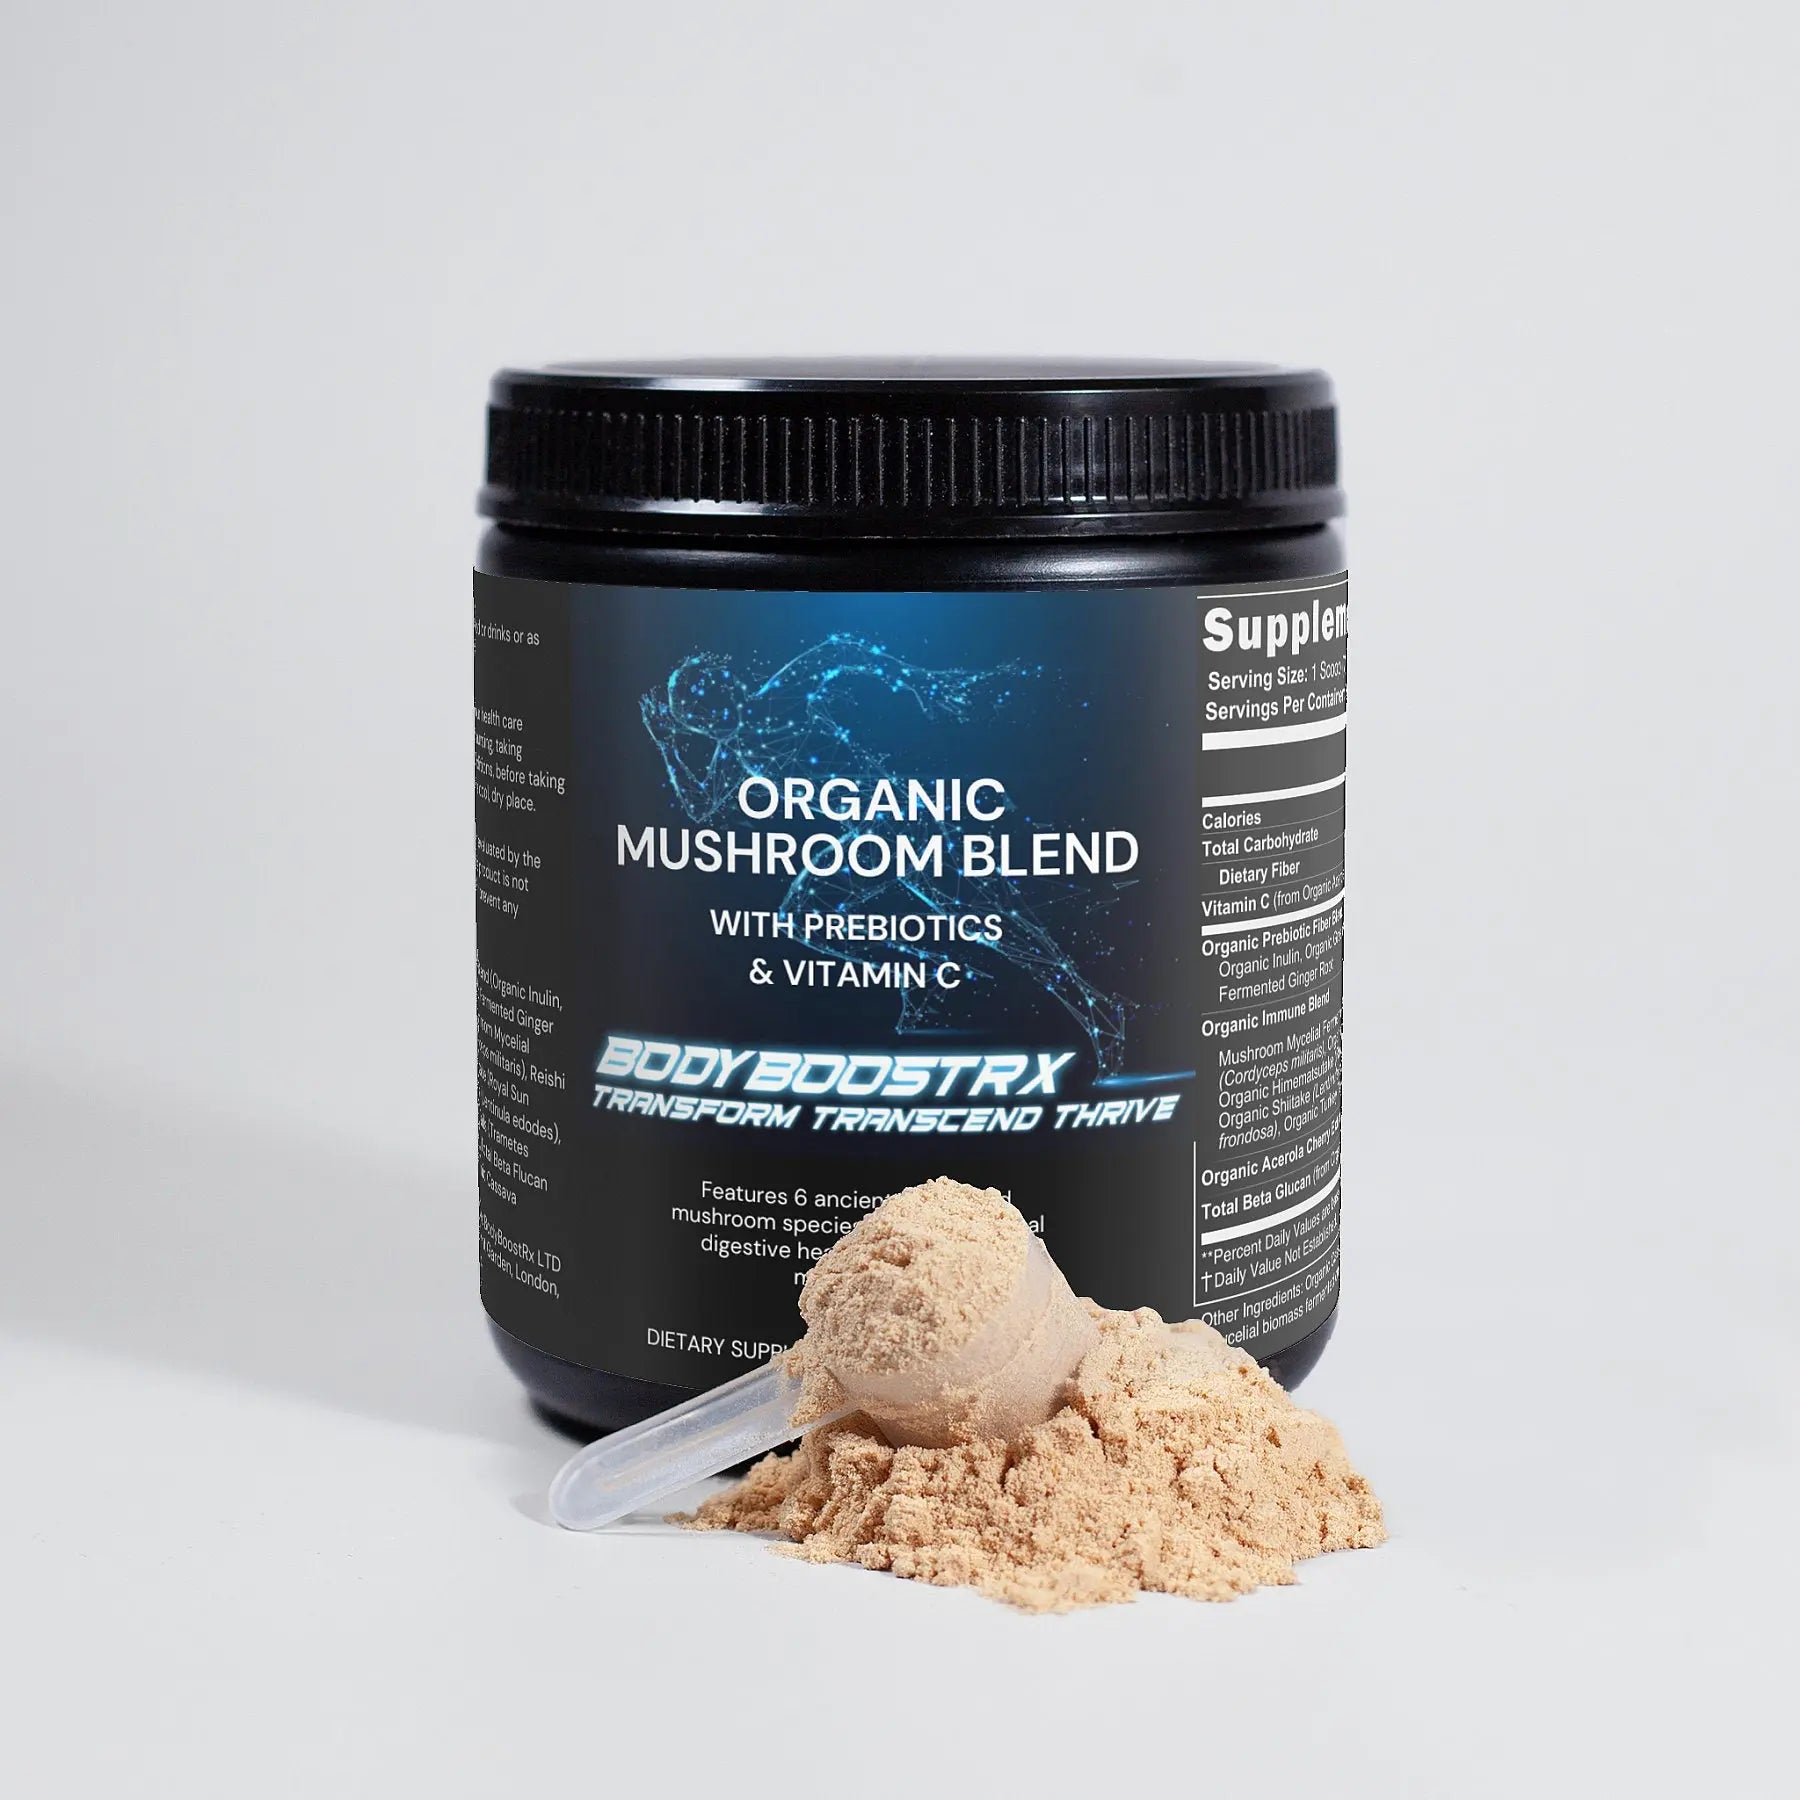 Organic Mushroom Blend - BodyBoostRx